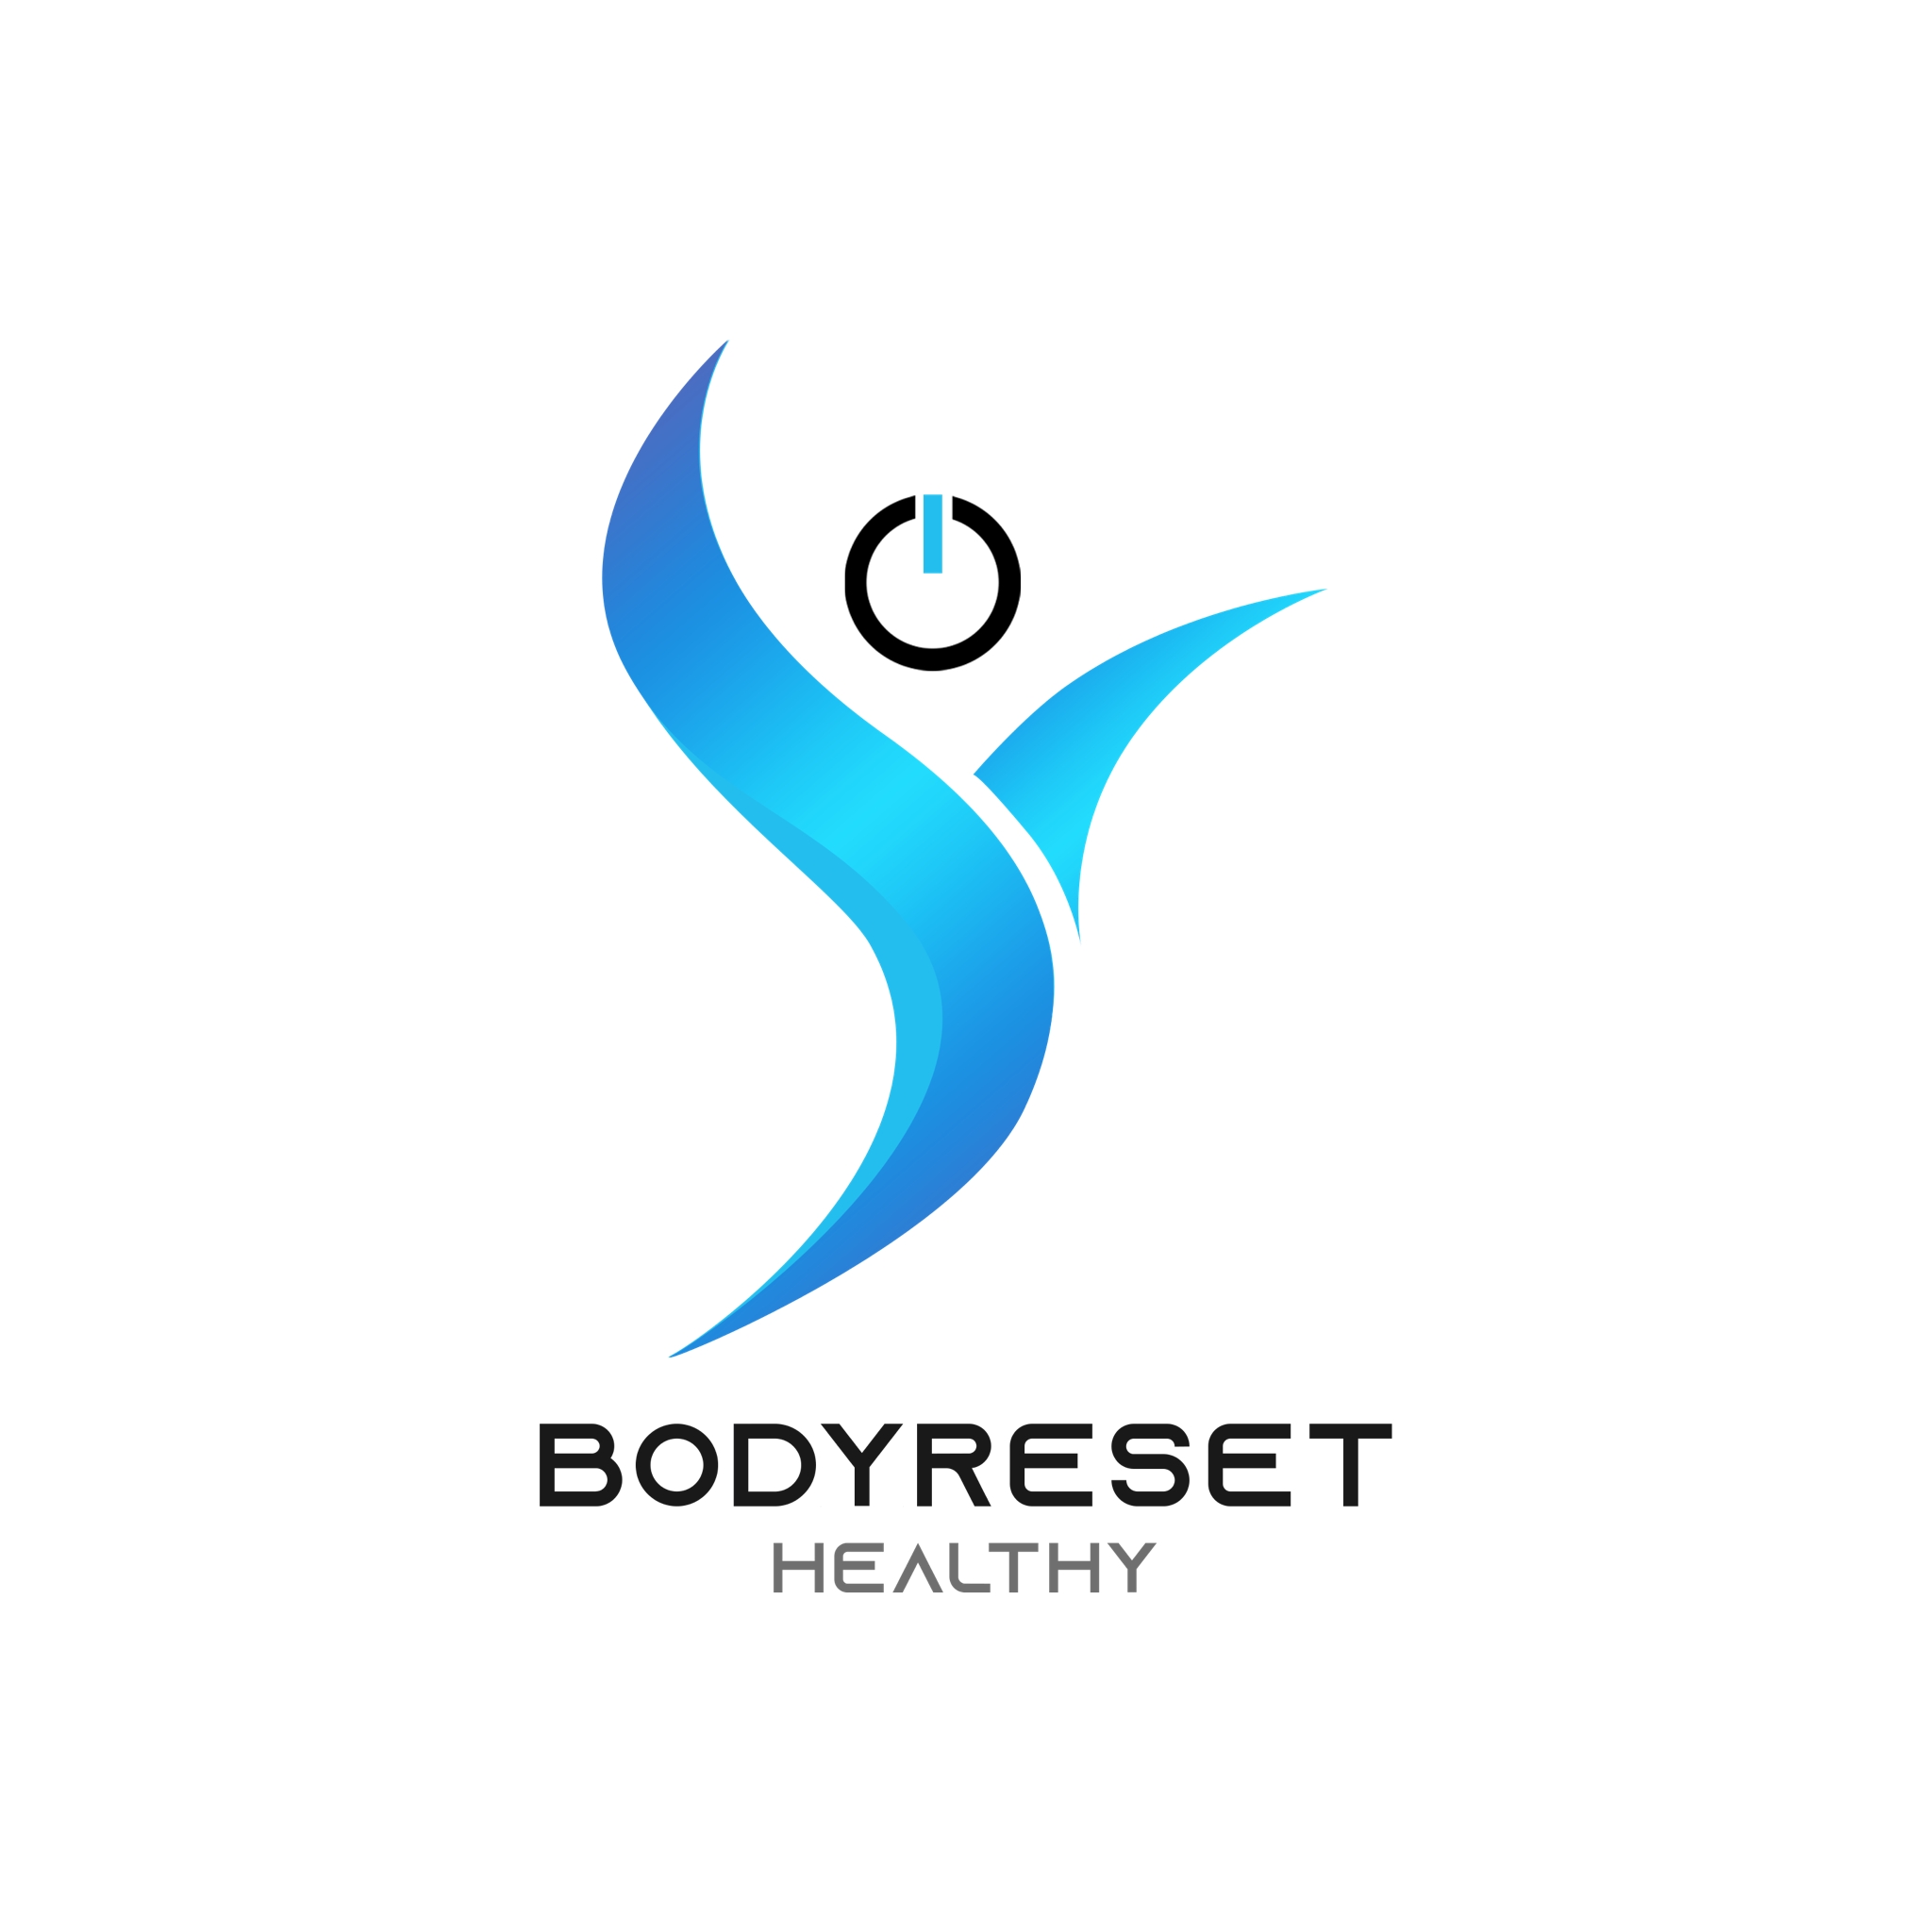 image-12057920-BodyReset_Healthy_logo-16790.jpg